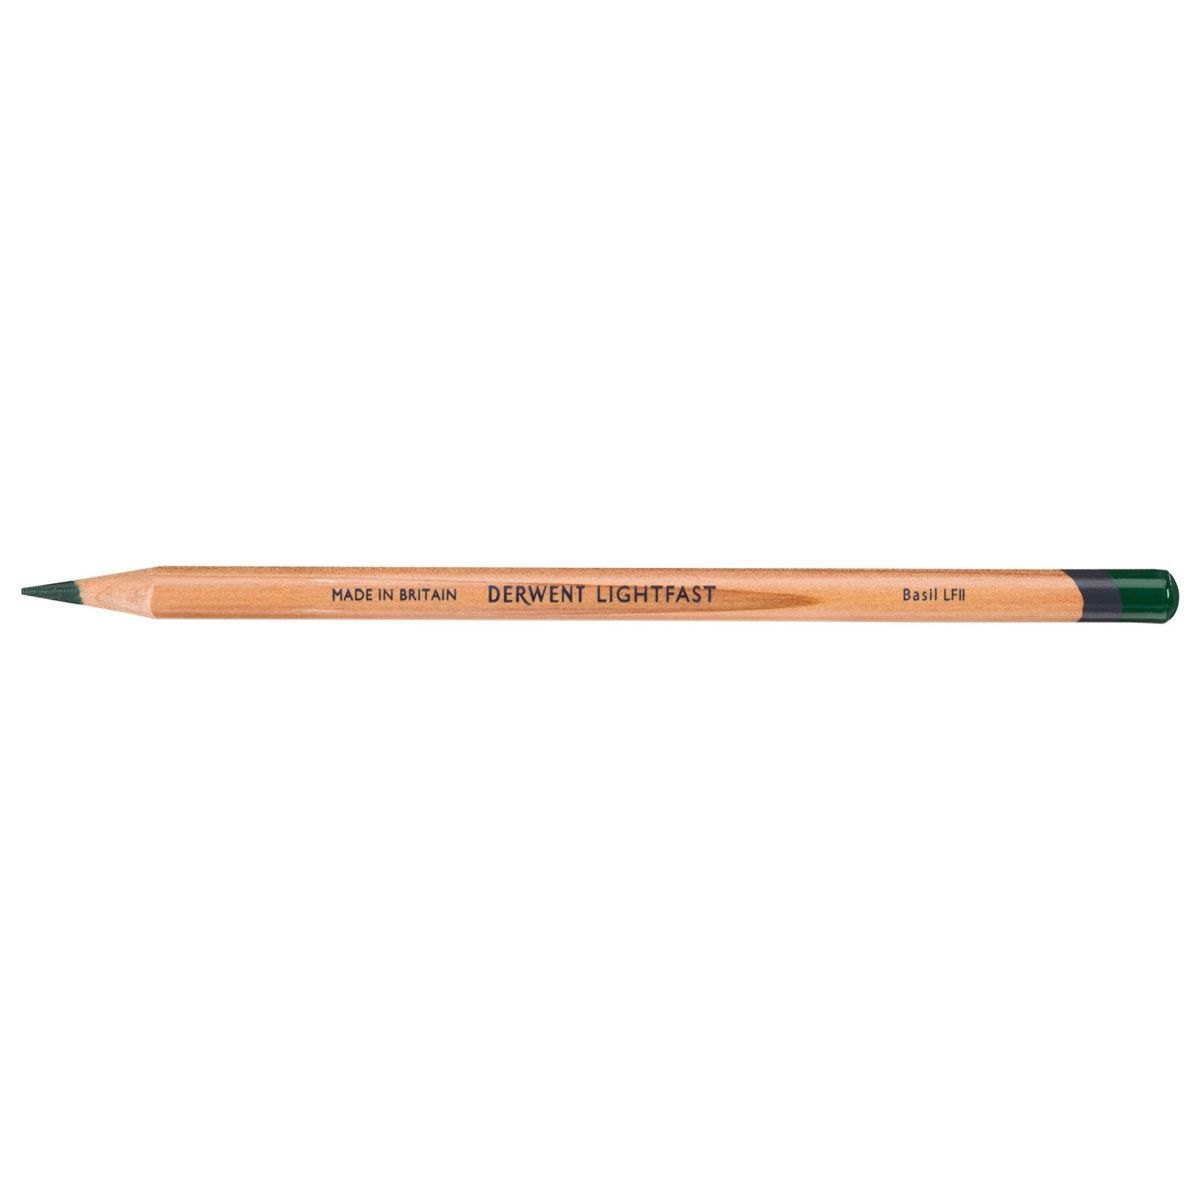 NEW Derwent Lightfast Pencil Colour: Basil